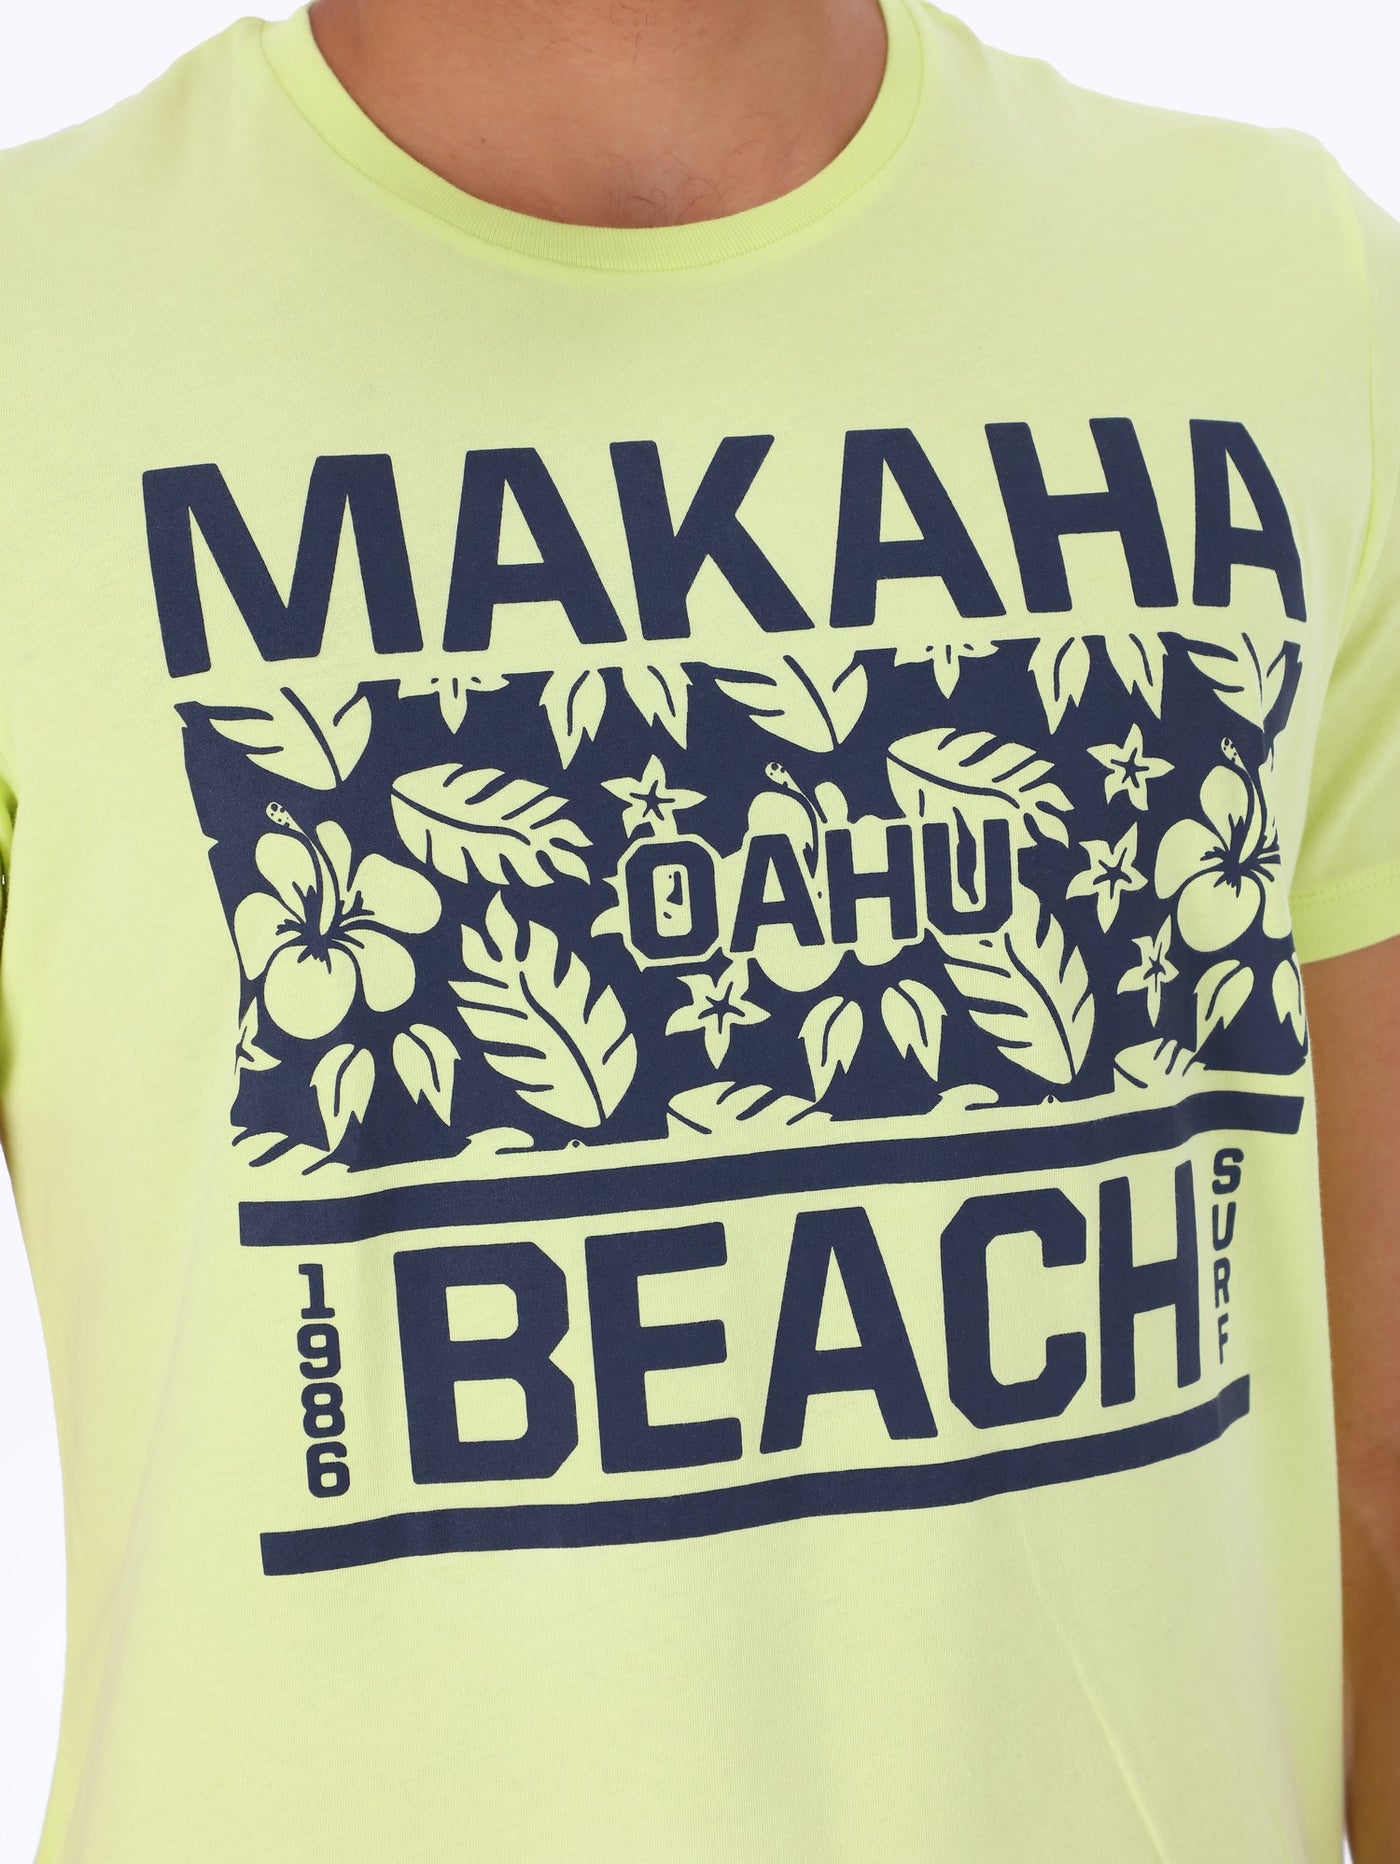 OR Men's Makaha Beach Print T-Shirt